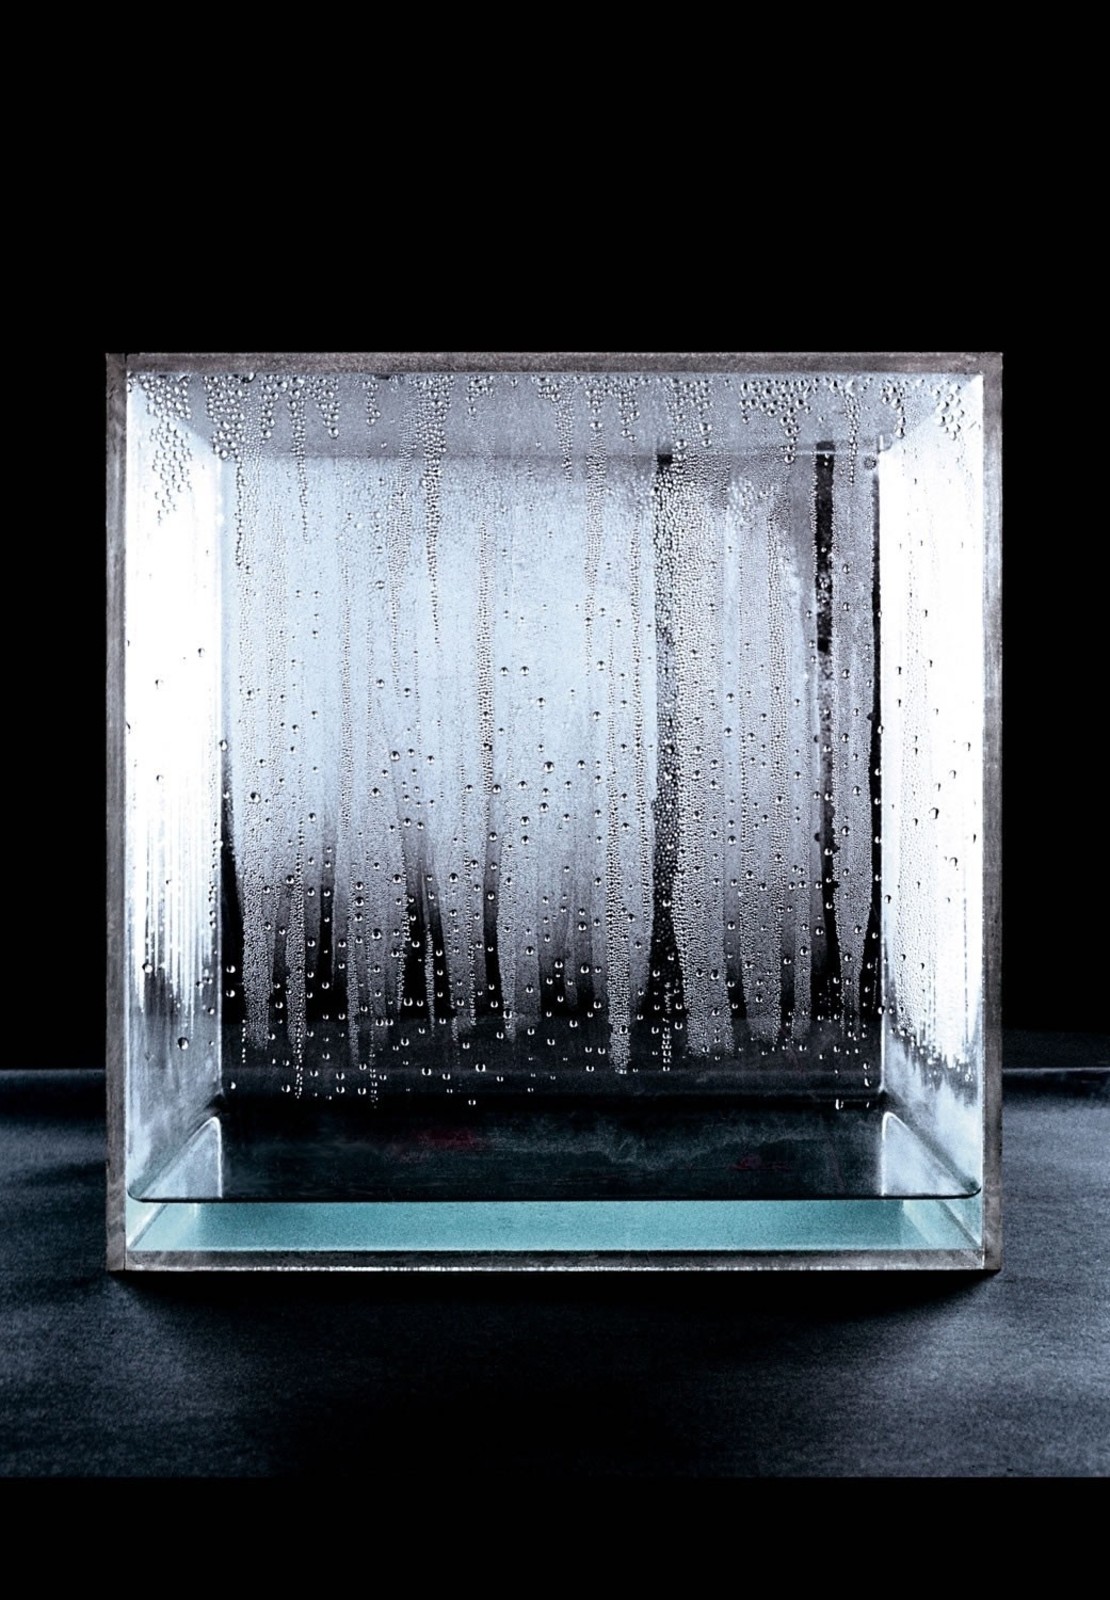 Hans Haacke. Condensation Cube. 1963&mdash;1965. Plexiglass, water. Museum of Contemporary Art MACBA, Barcelona. 76 x 76 x 76 cm